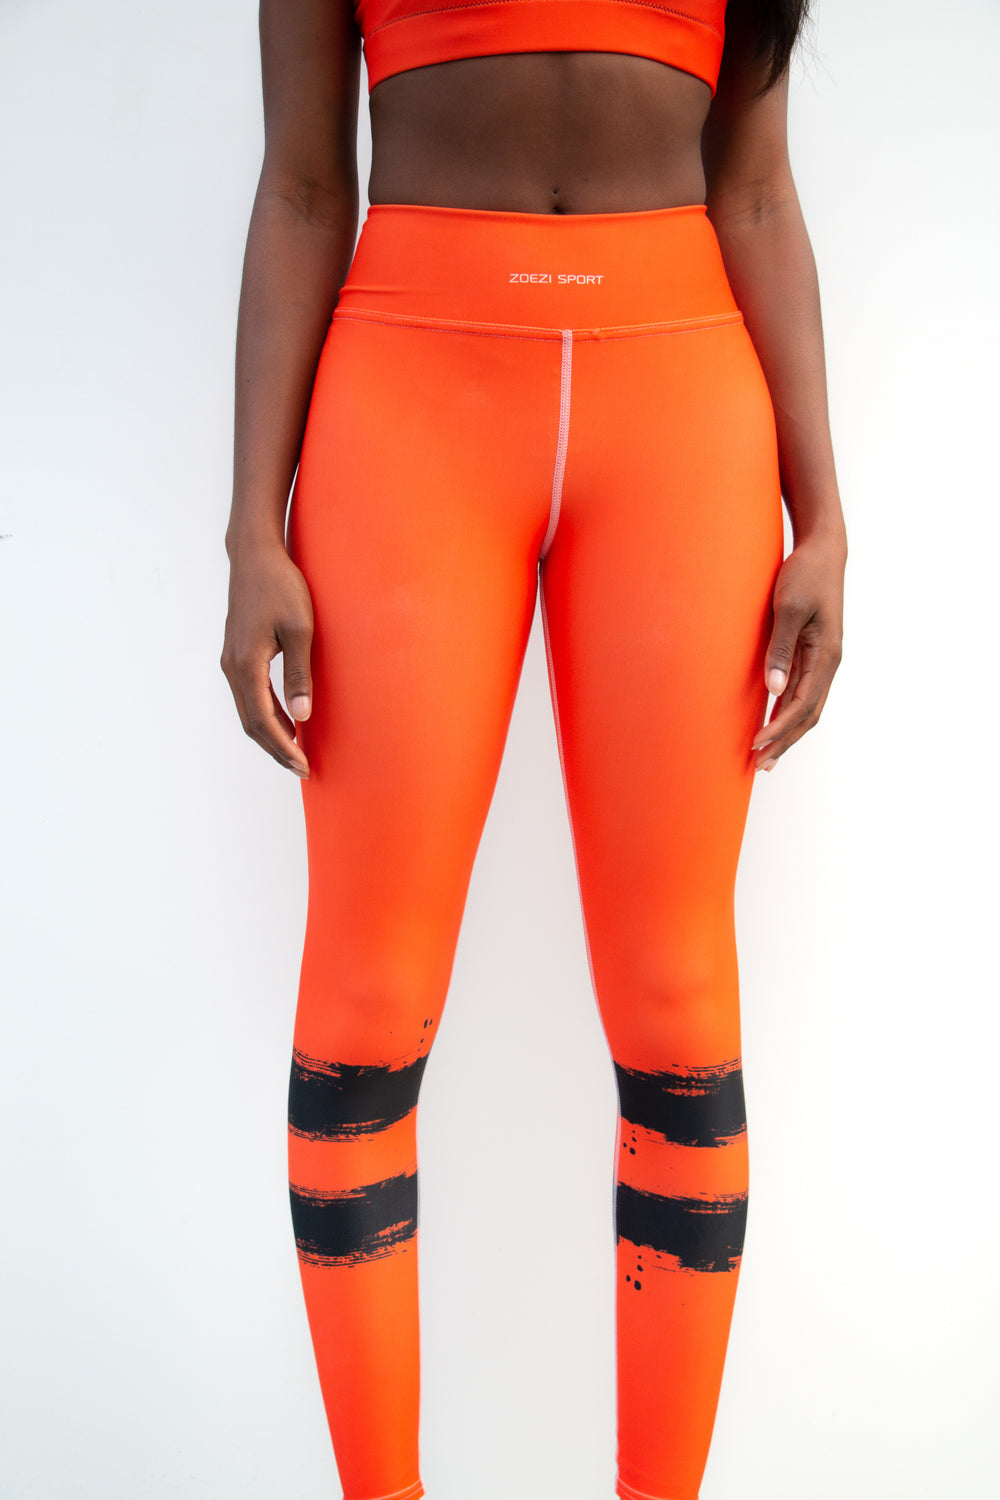 Tangerine Activewear Athletic Leggings for Women